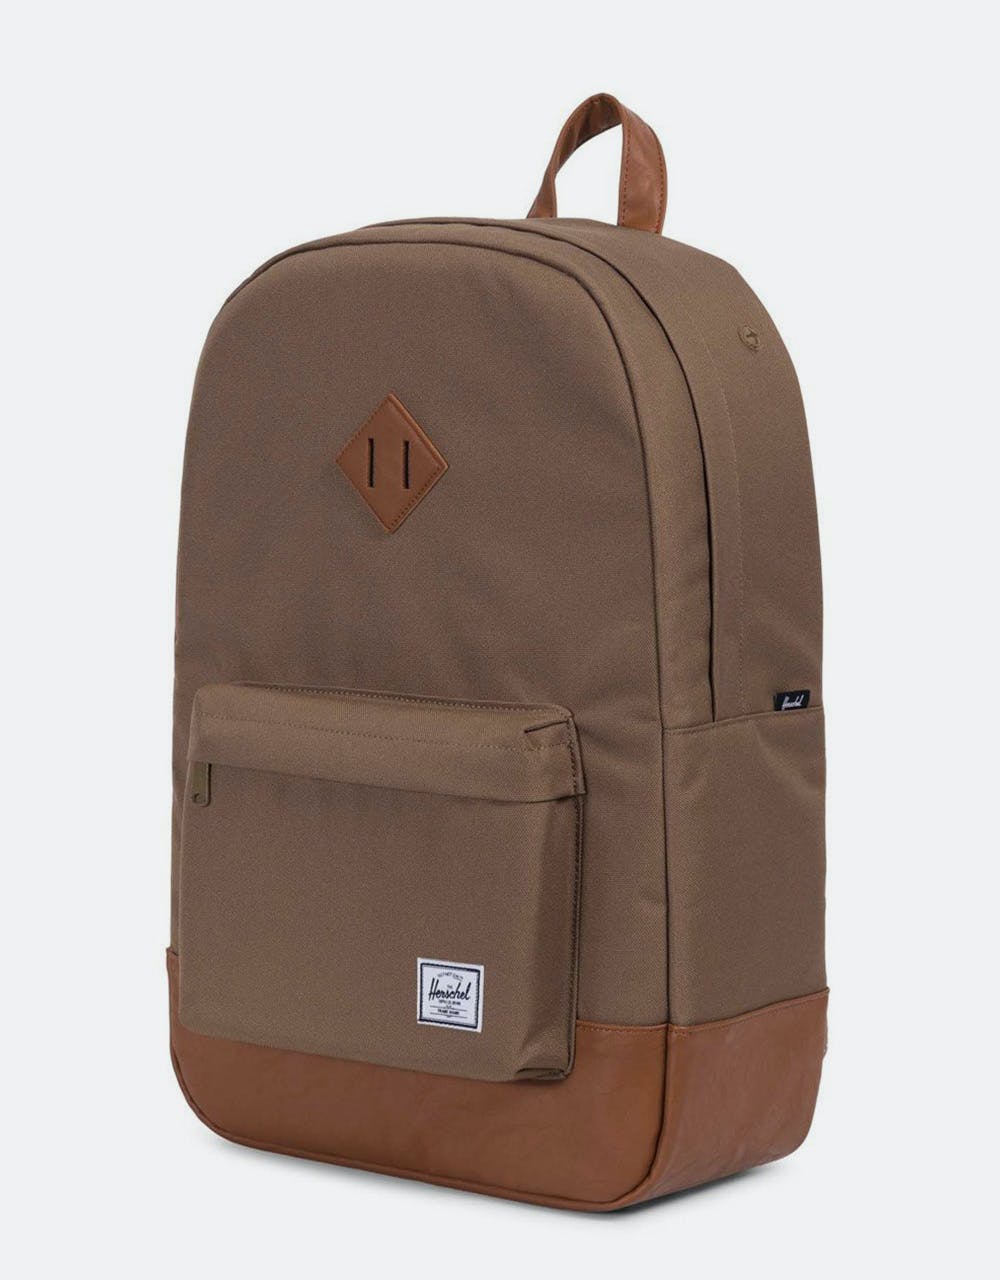 Herschel Supply Co. Heritage Backpack - Cub/Tan